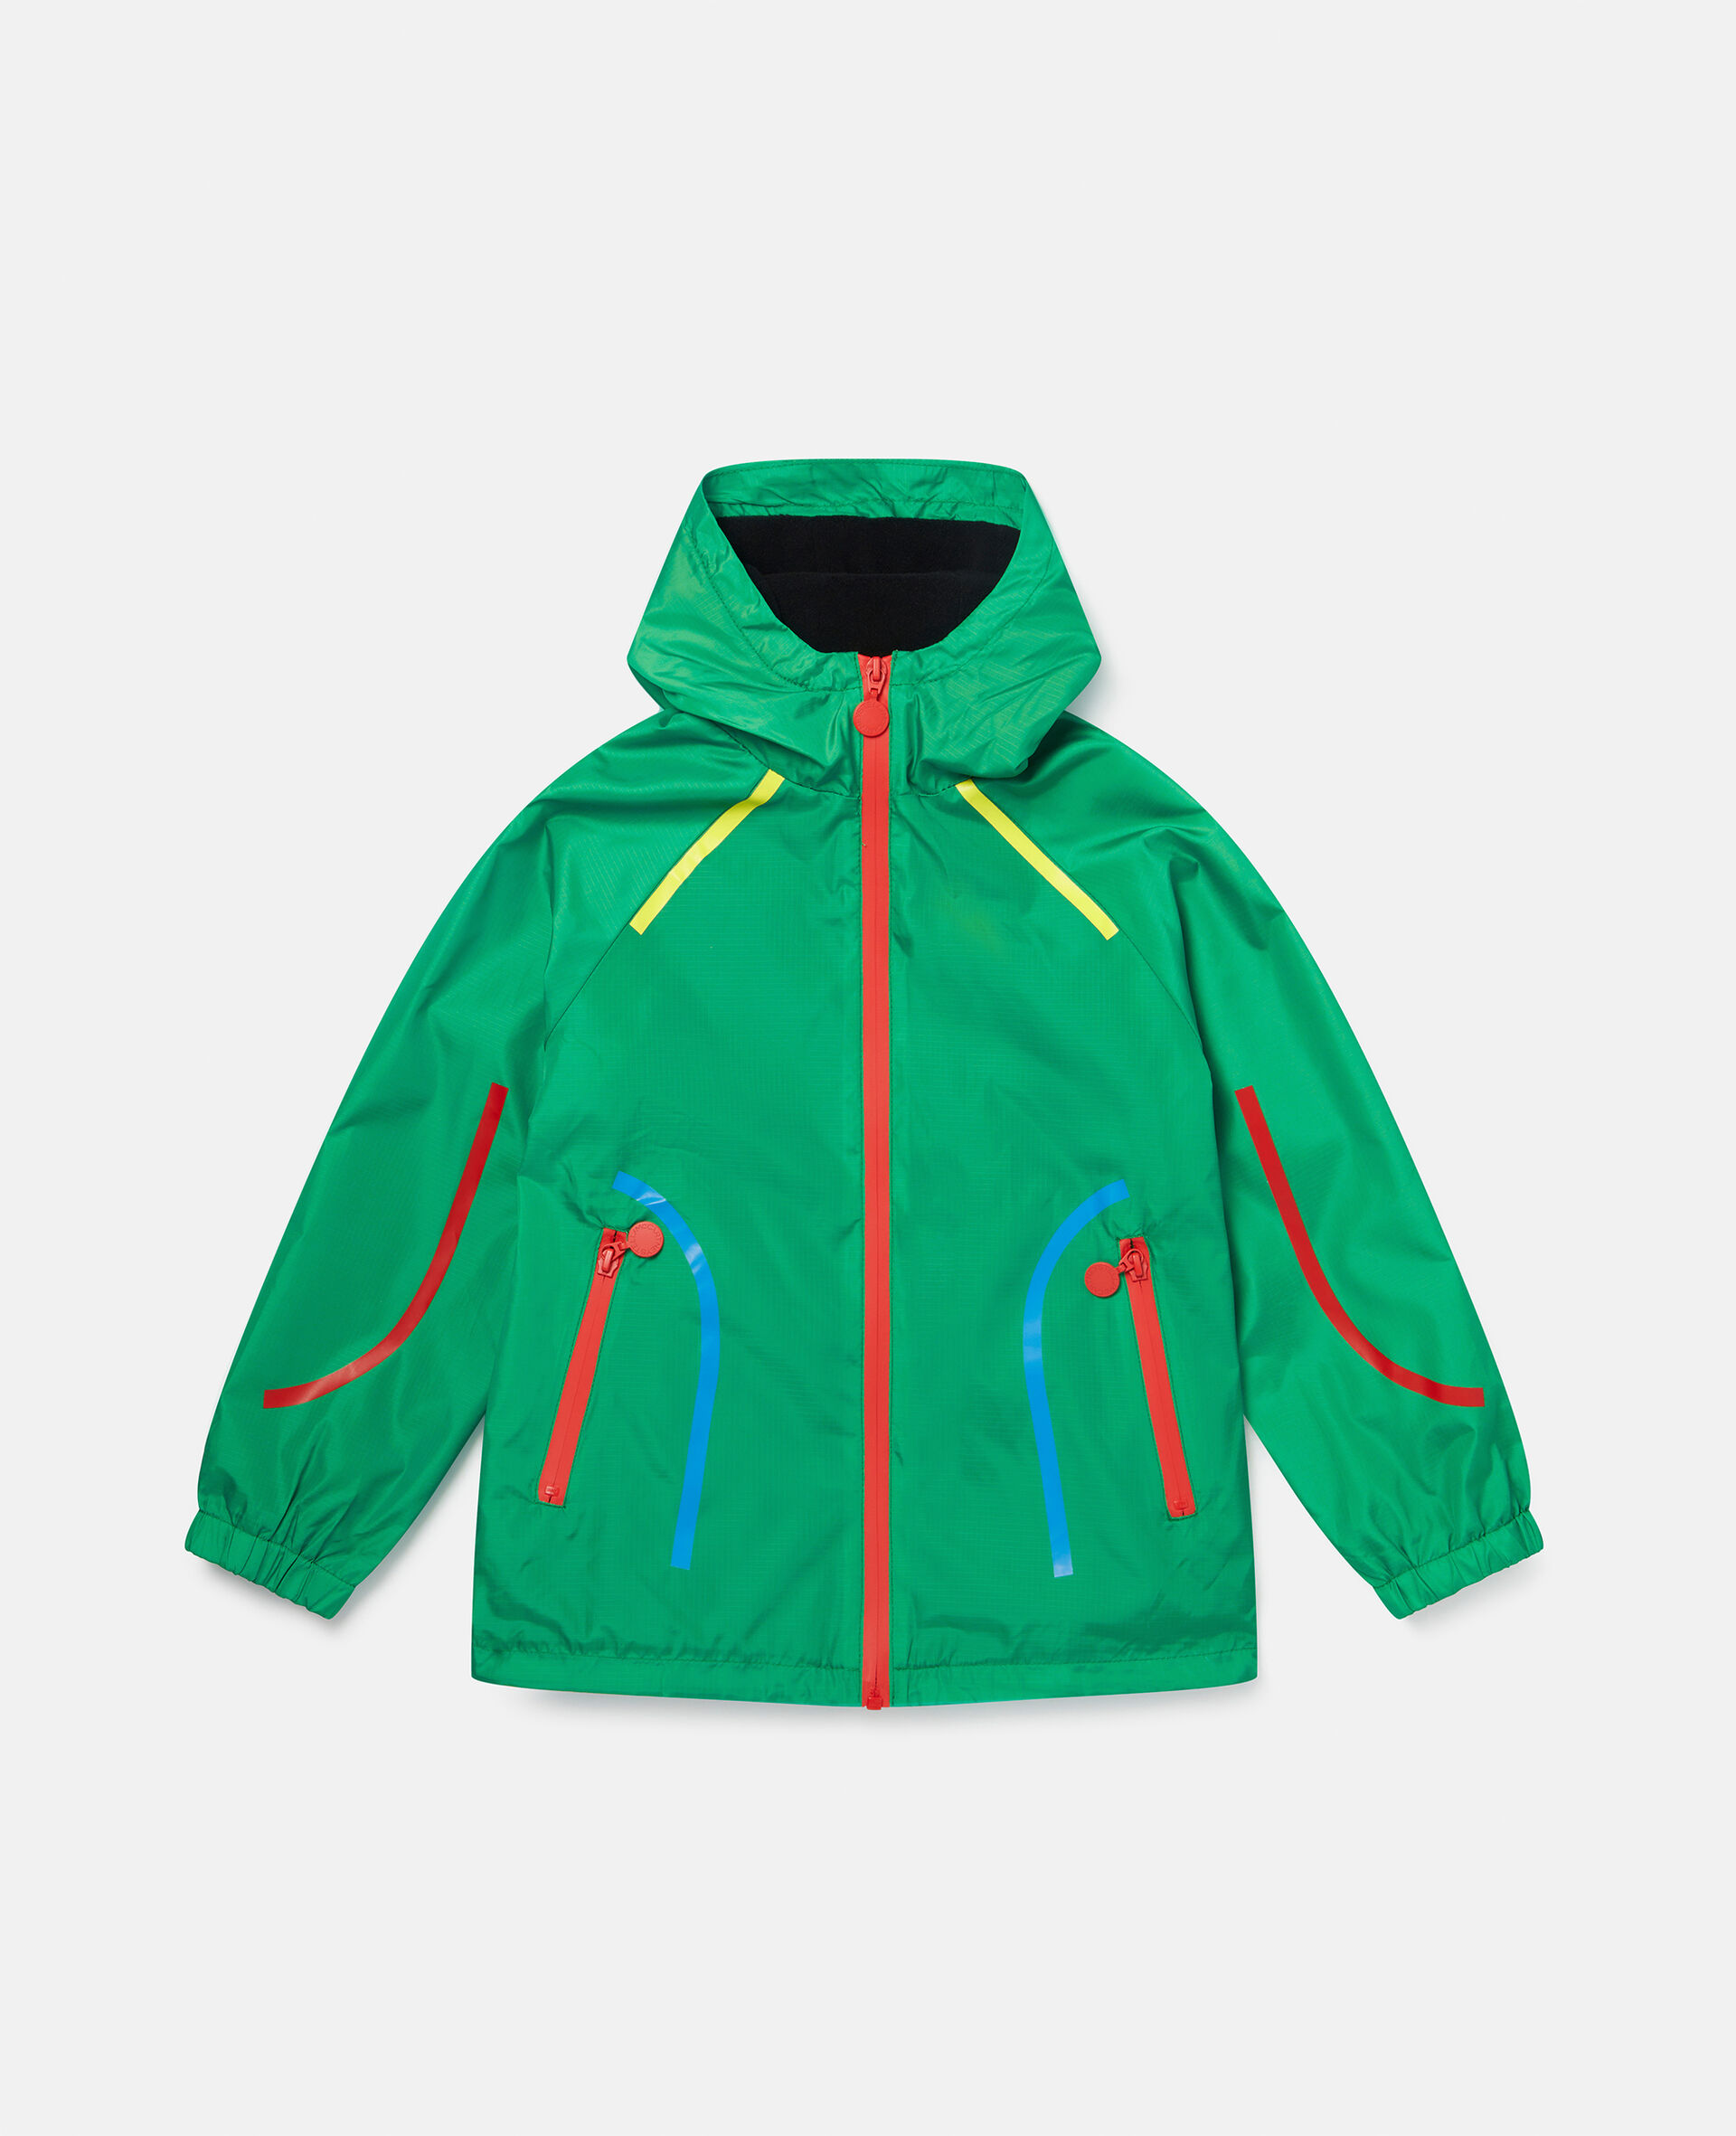 Multicolour Tape Rain Jacket-Green-large image number 0